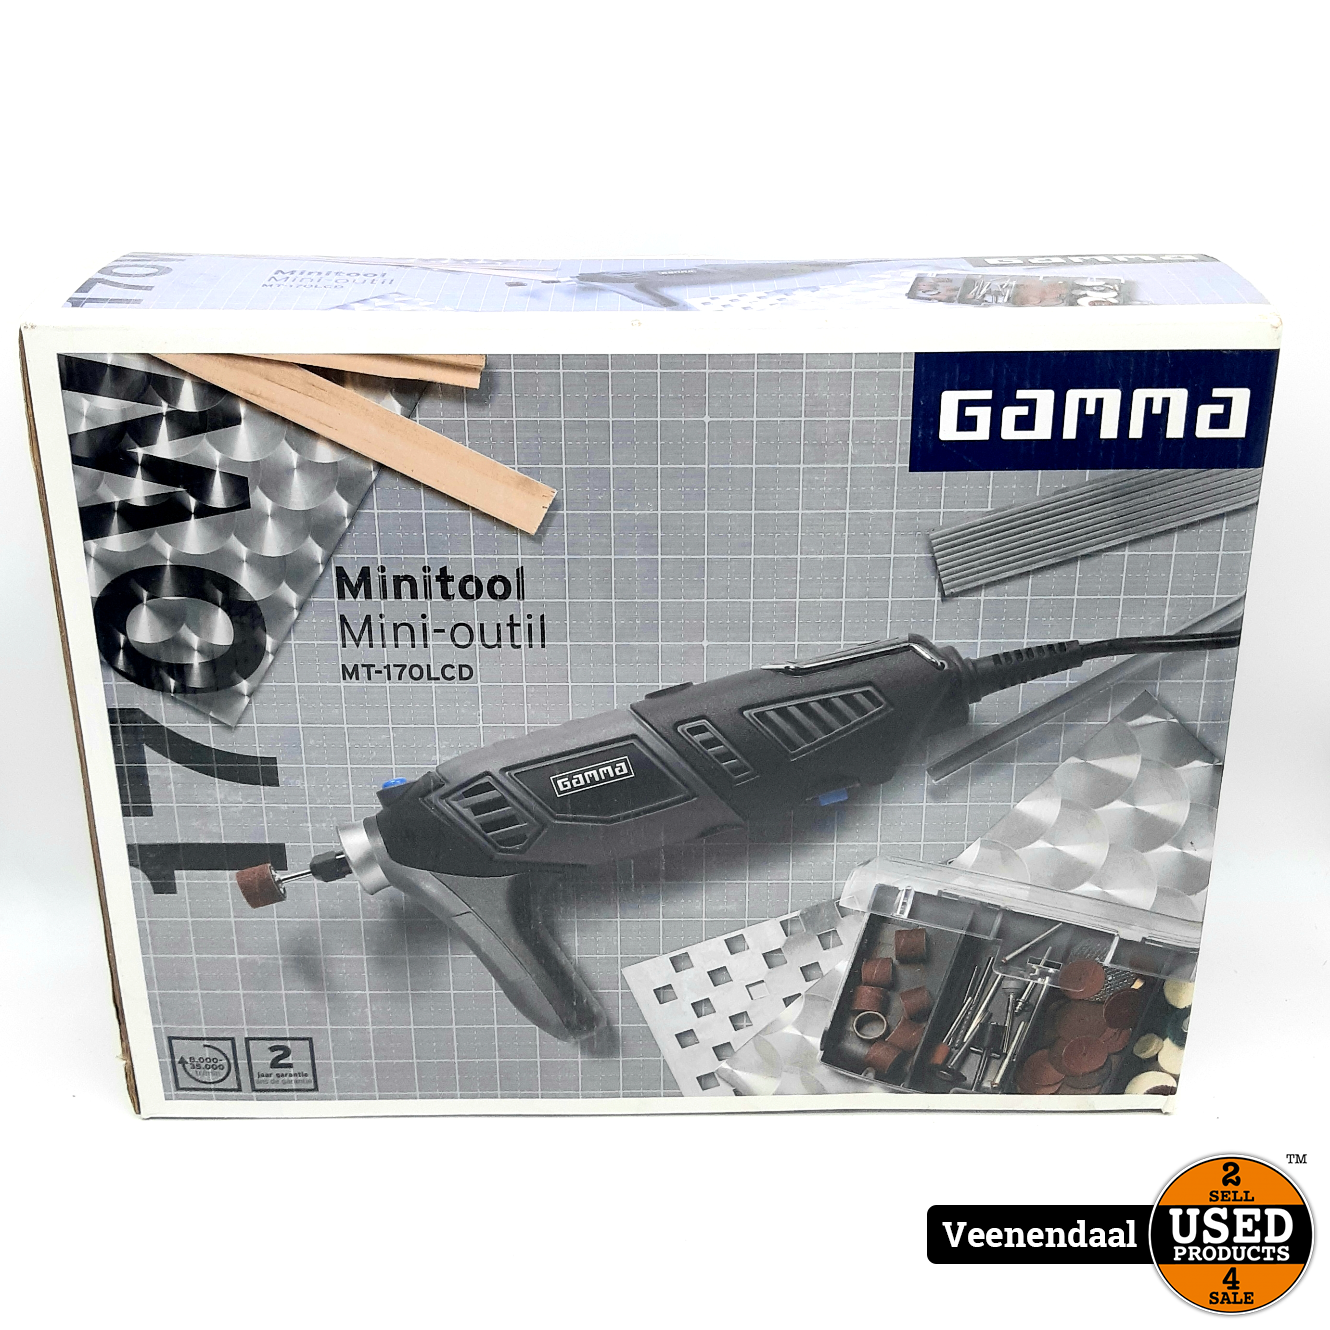 Gamma GAMMA minitool MT-170LCD + koffer en 60 - - Used Products Veenendaal